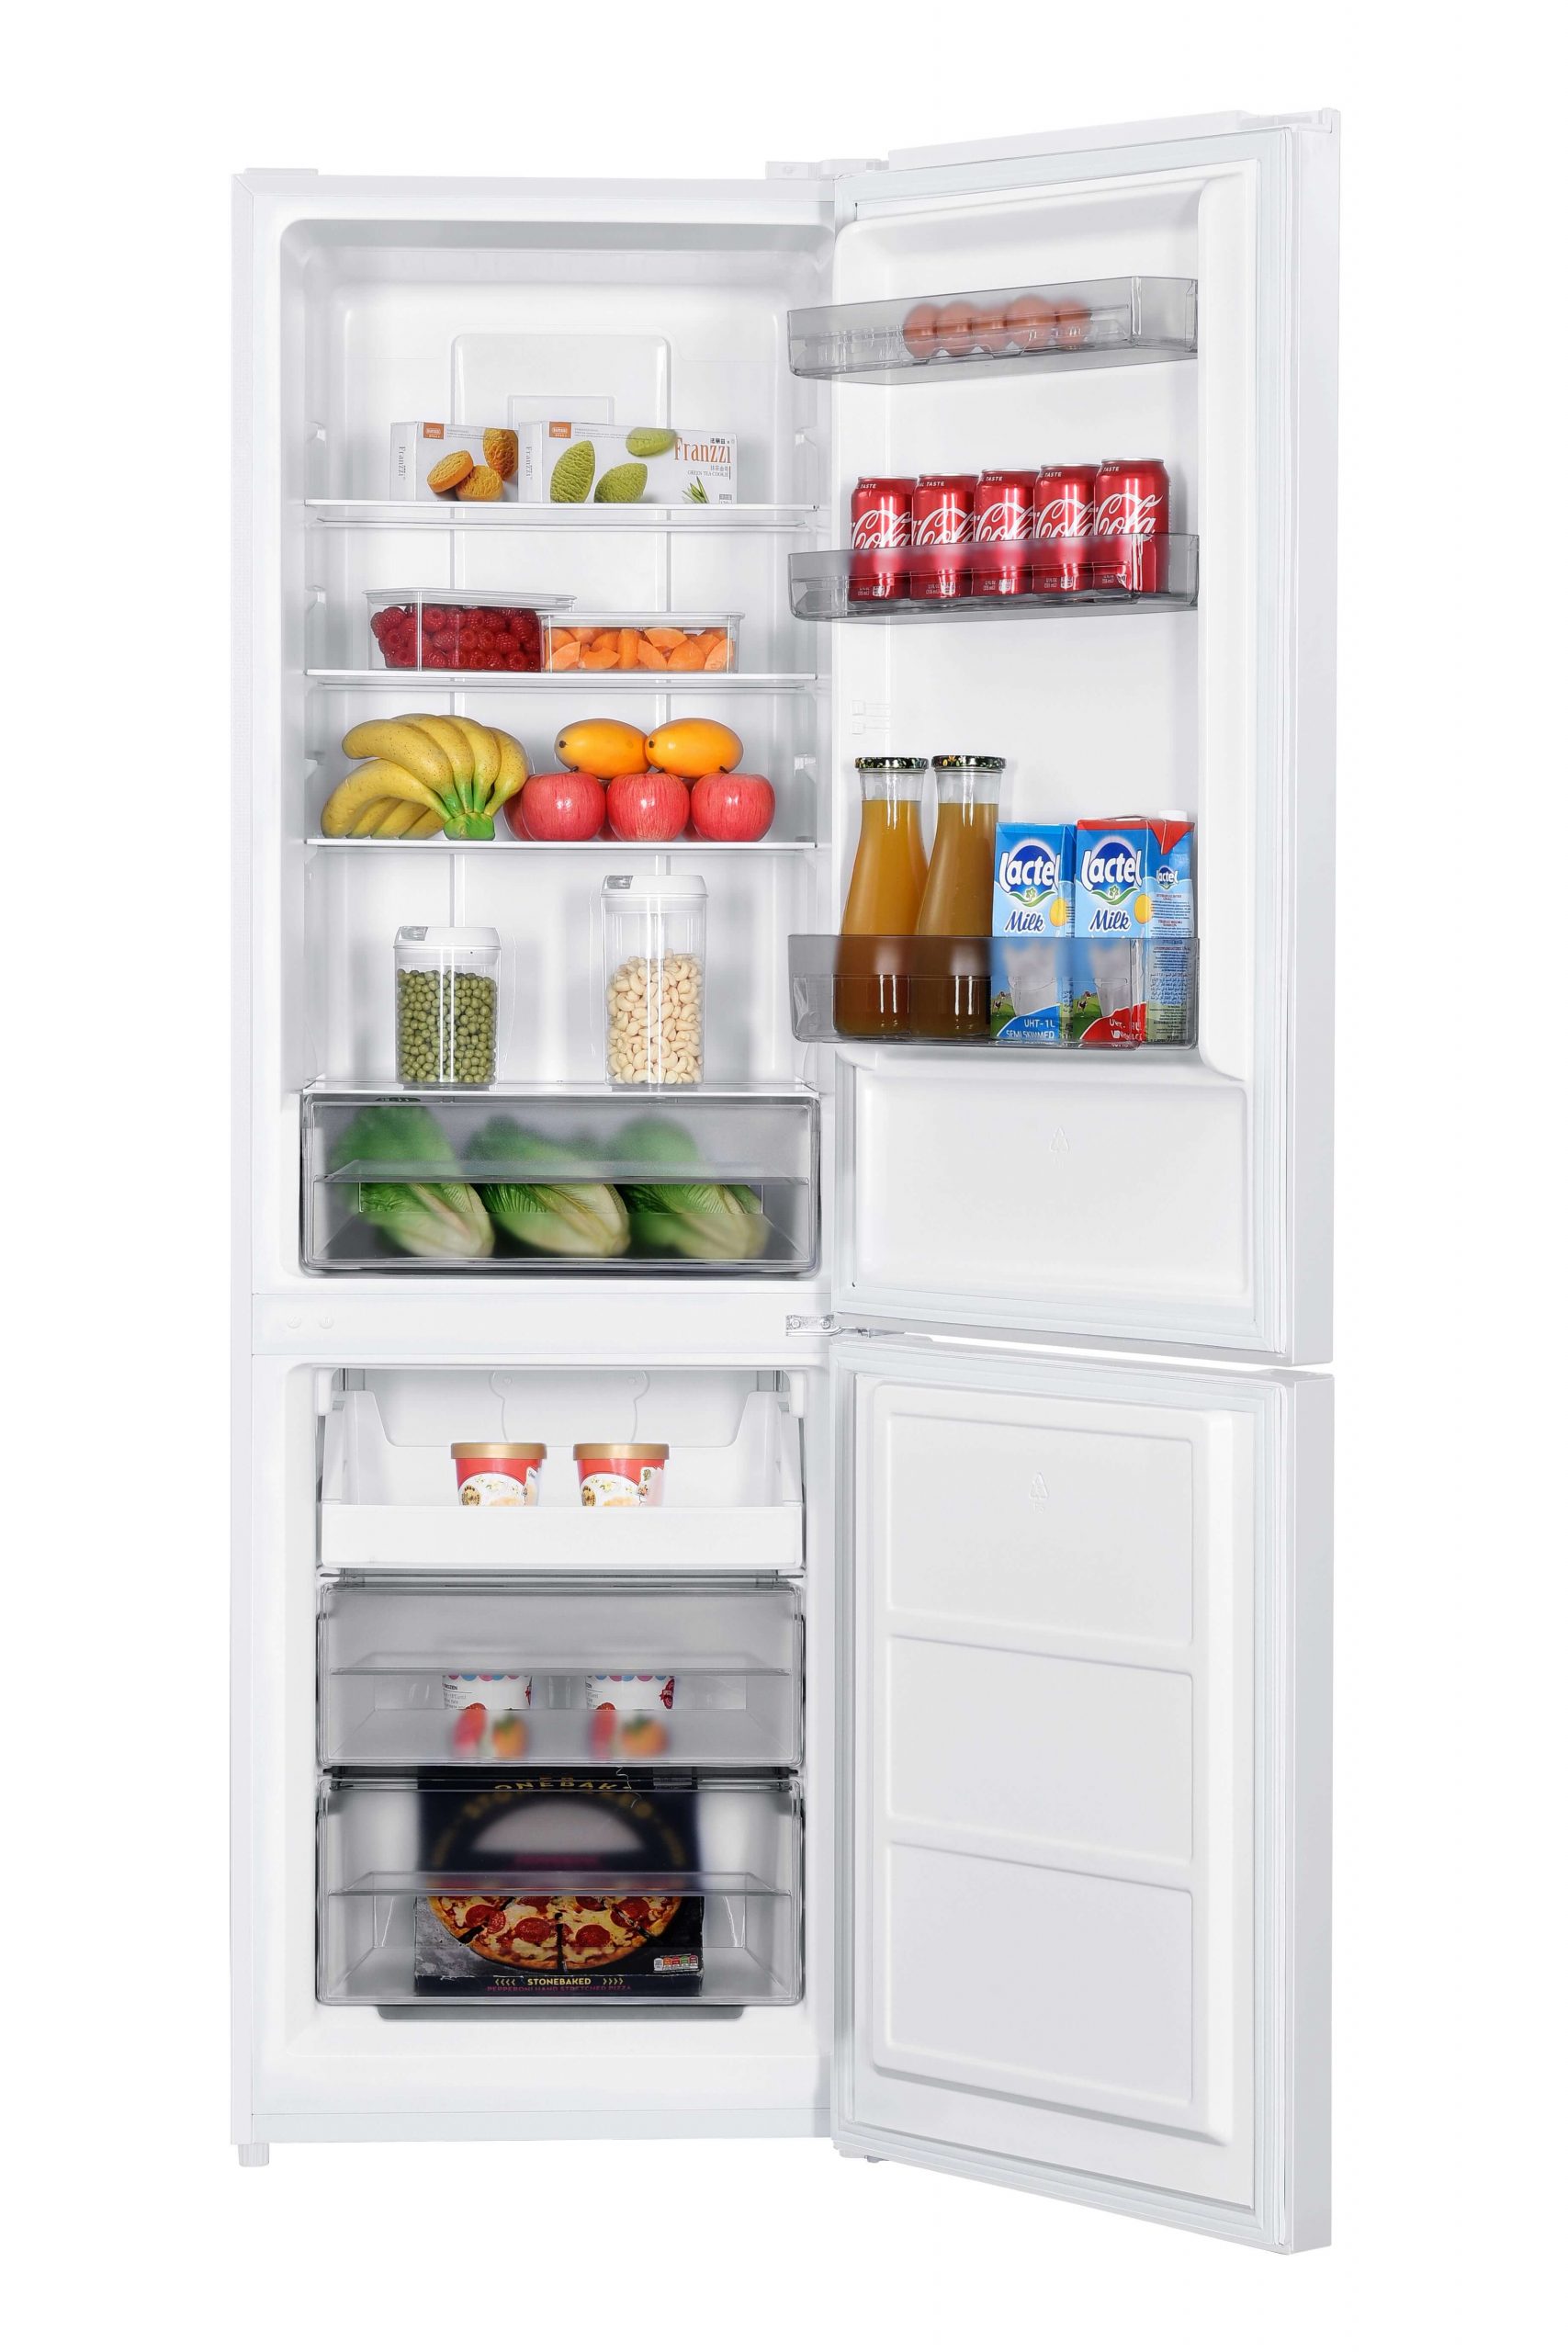 Danby 10 cu ft Bottom Mount Refrigerator